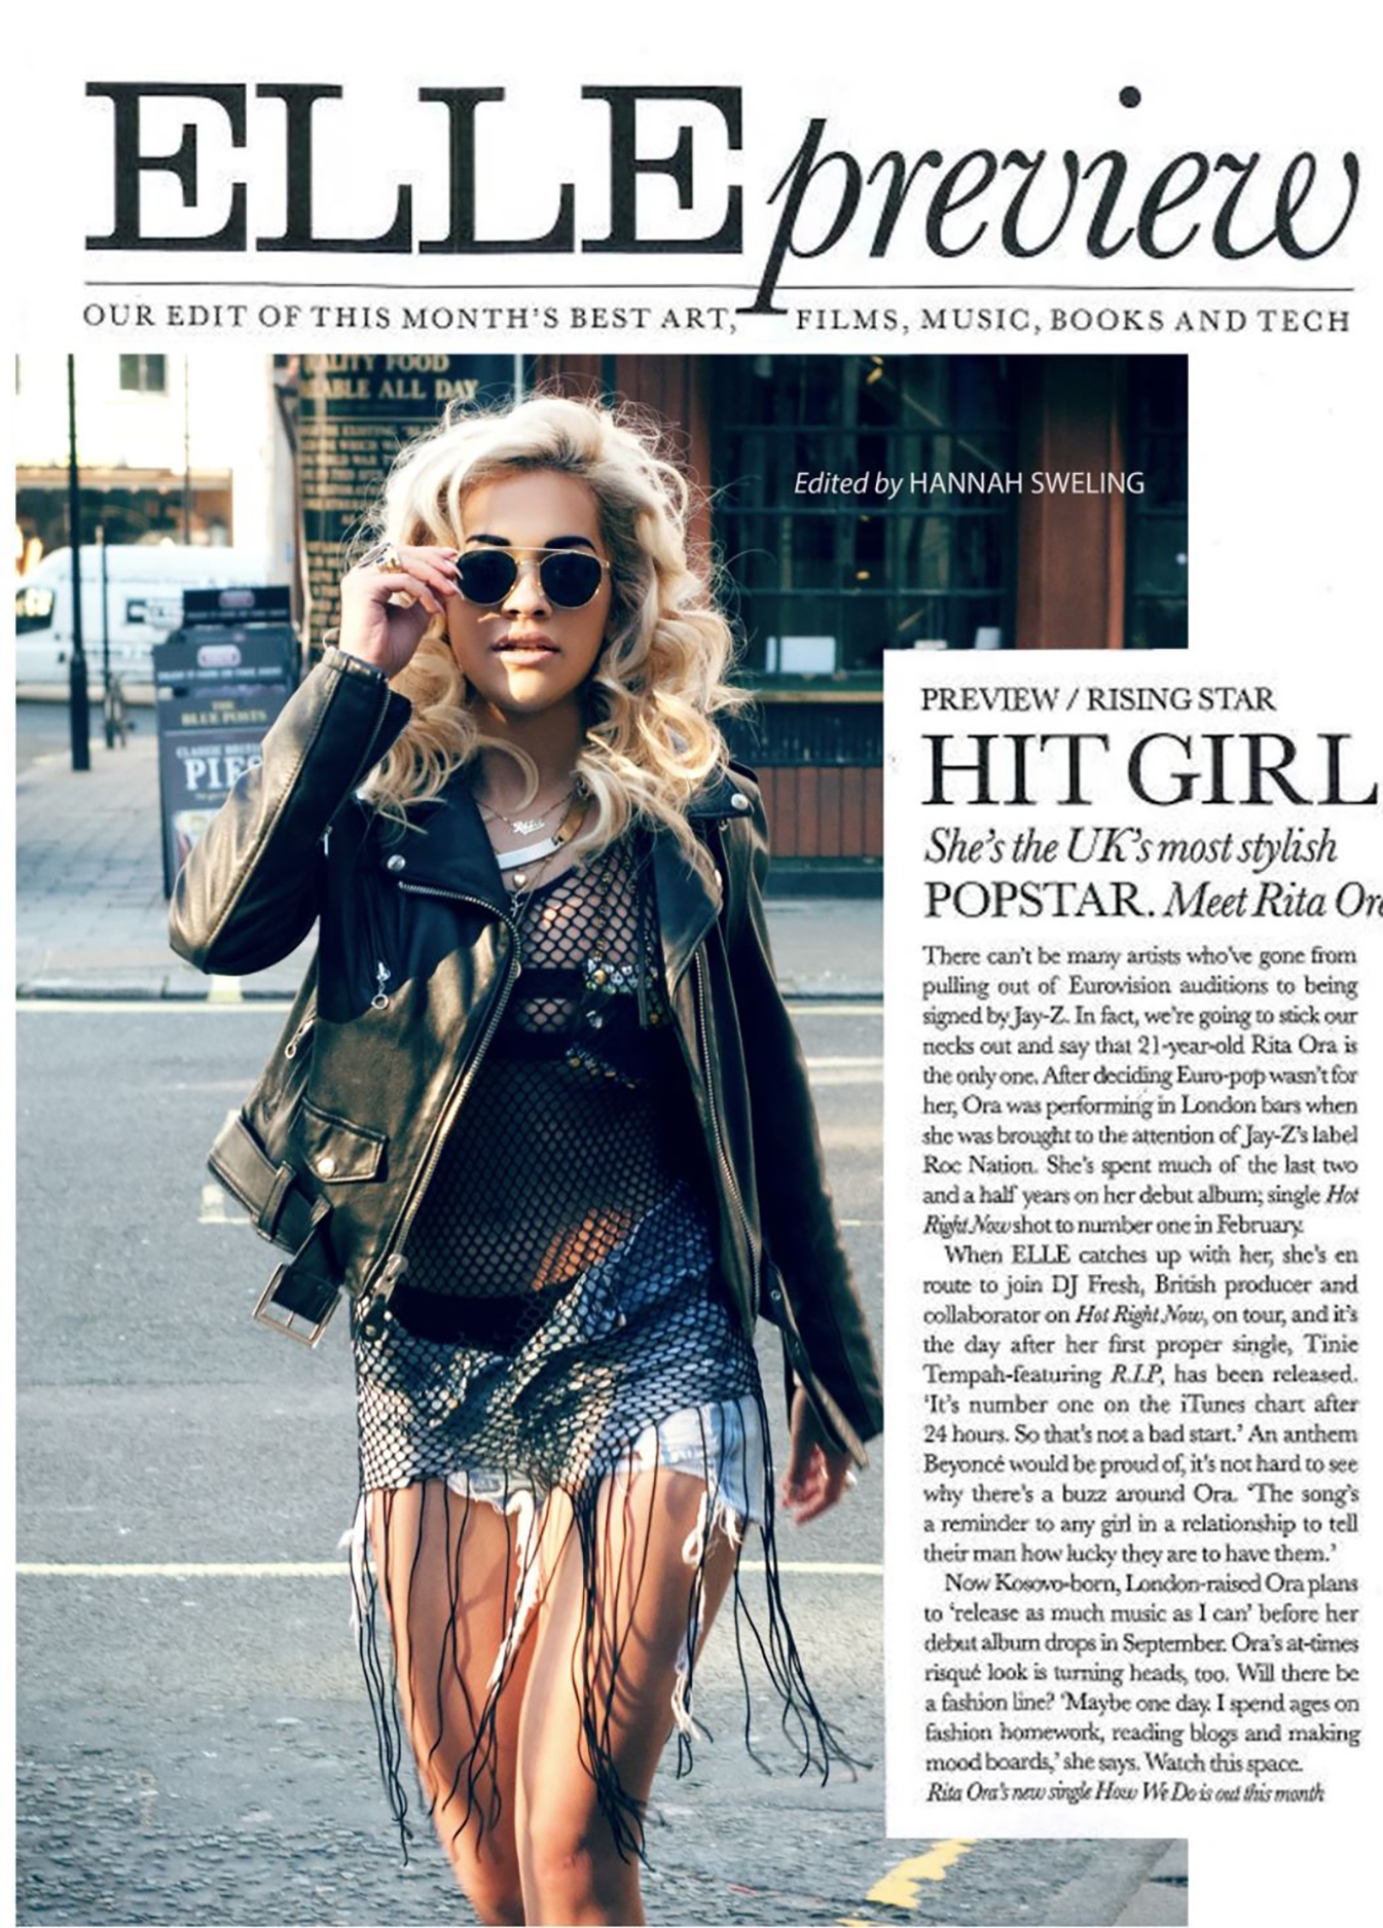 Rita Ora 'Press Shots' for Debut Album Release